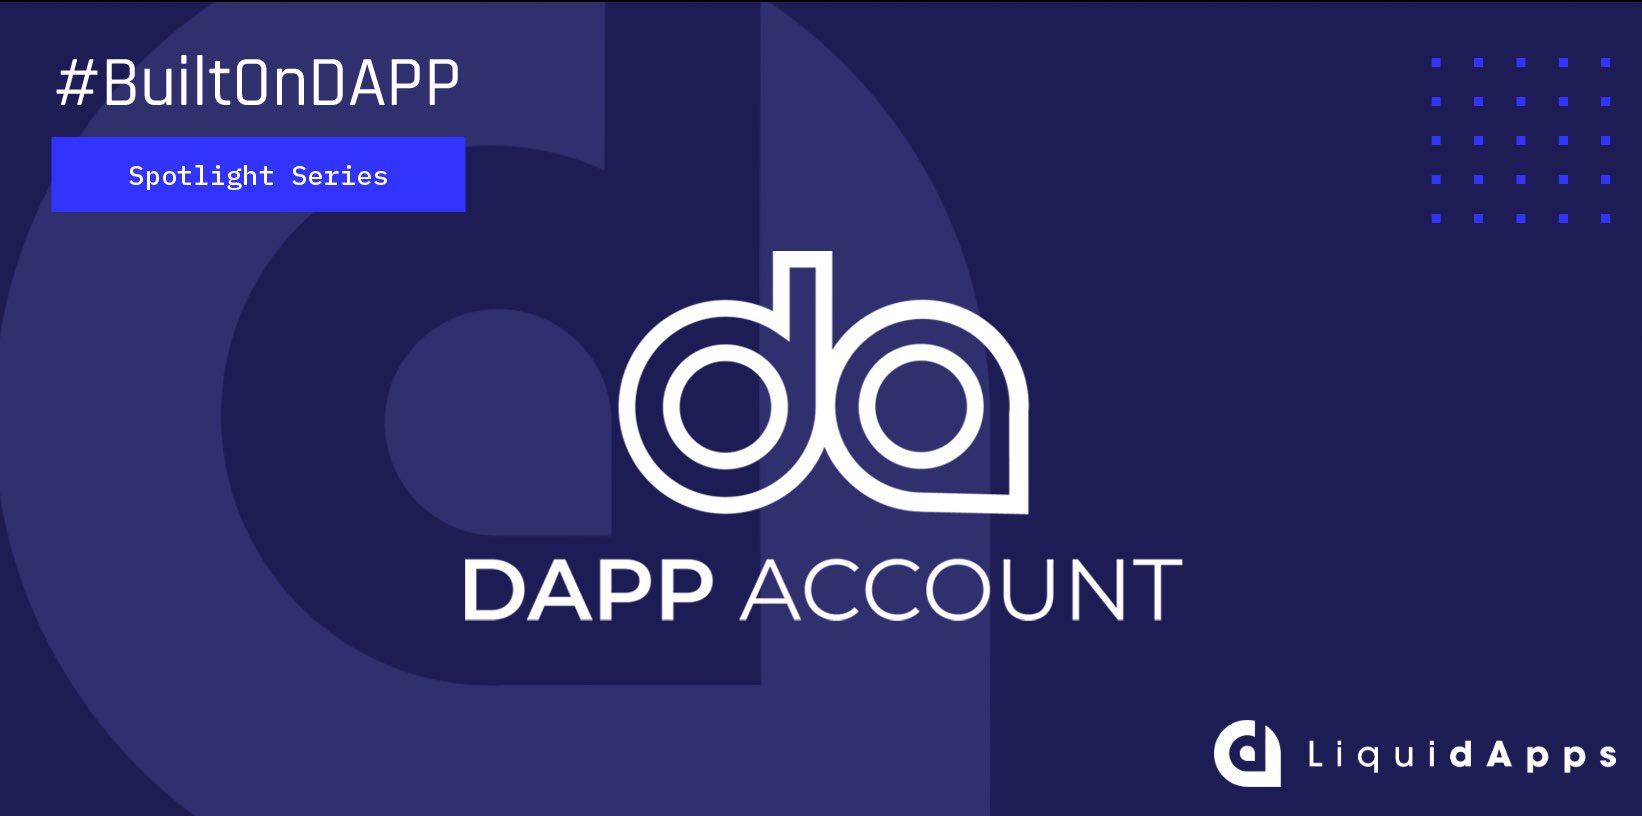 DAPP Account 作为一种非托管的区块链帐户，有什么不同之处？